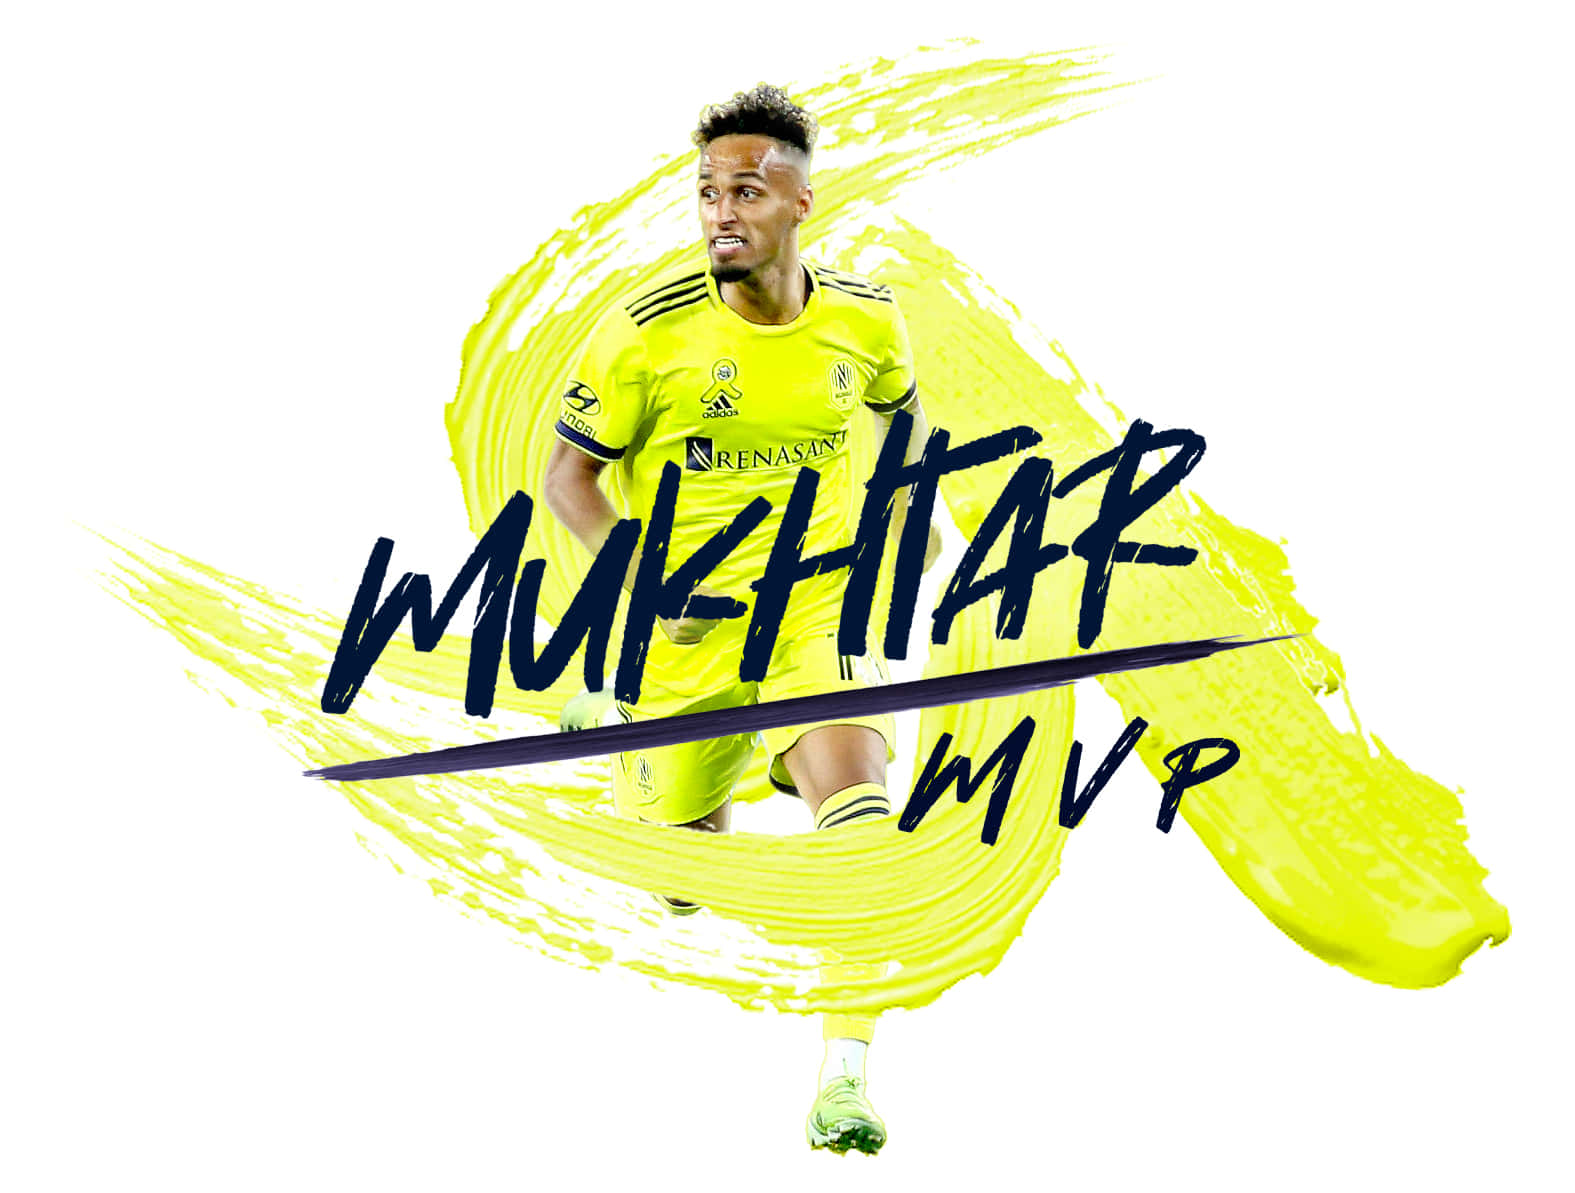 Hany Mukhtar MVP Yellow Paint Fan Art Wallpaper